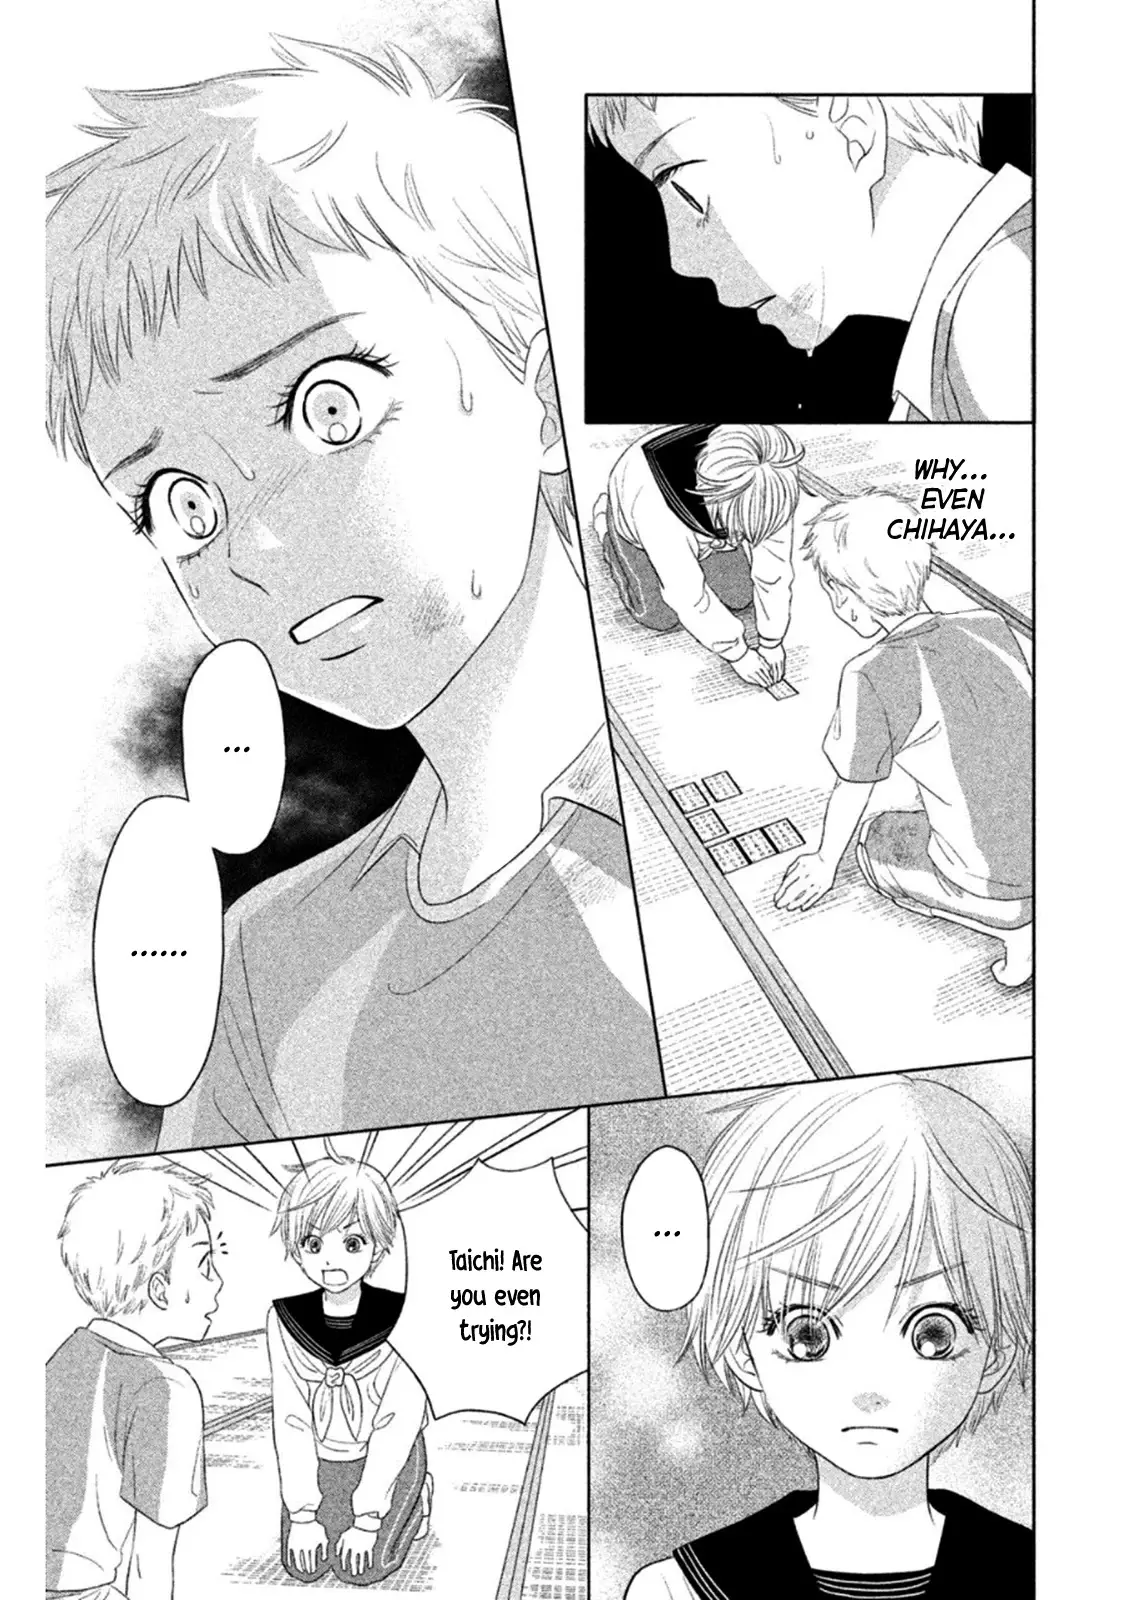 Chihayafuru: Middle School Arc - 3 page 26